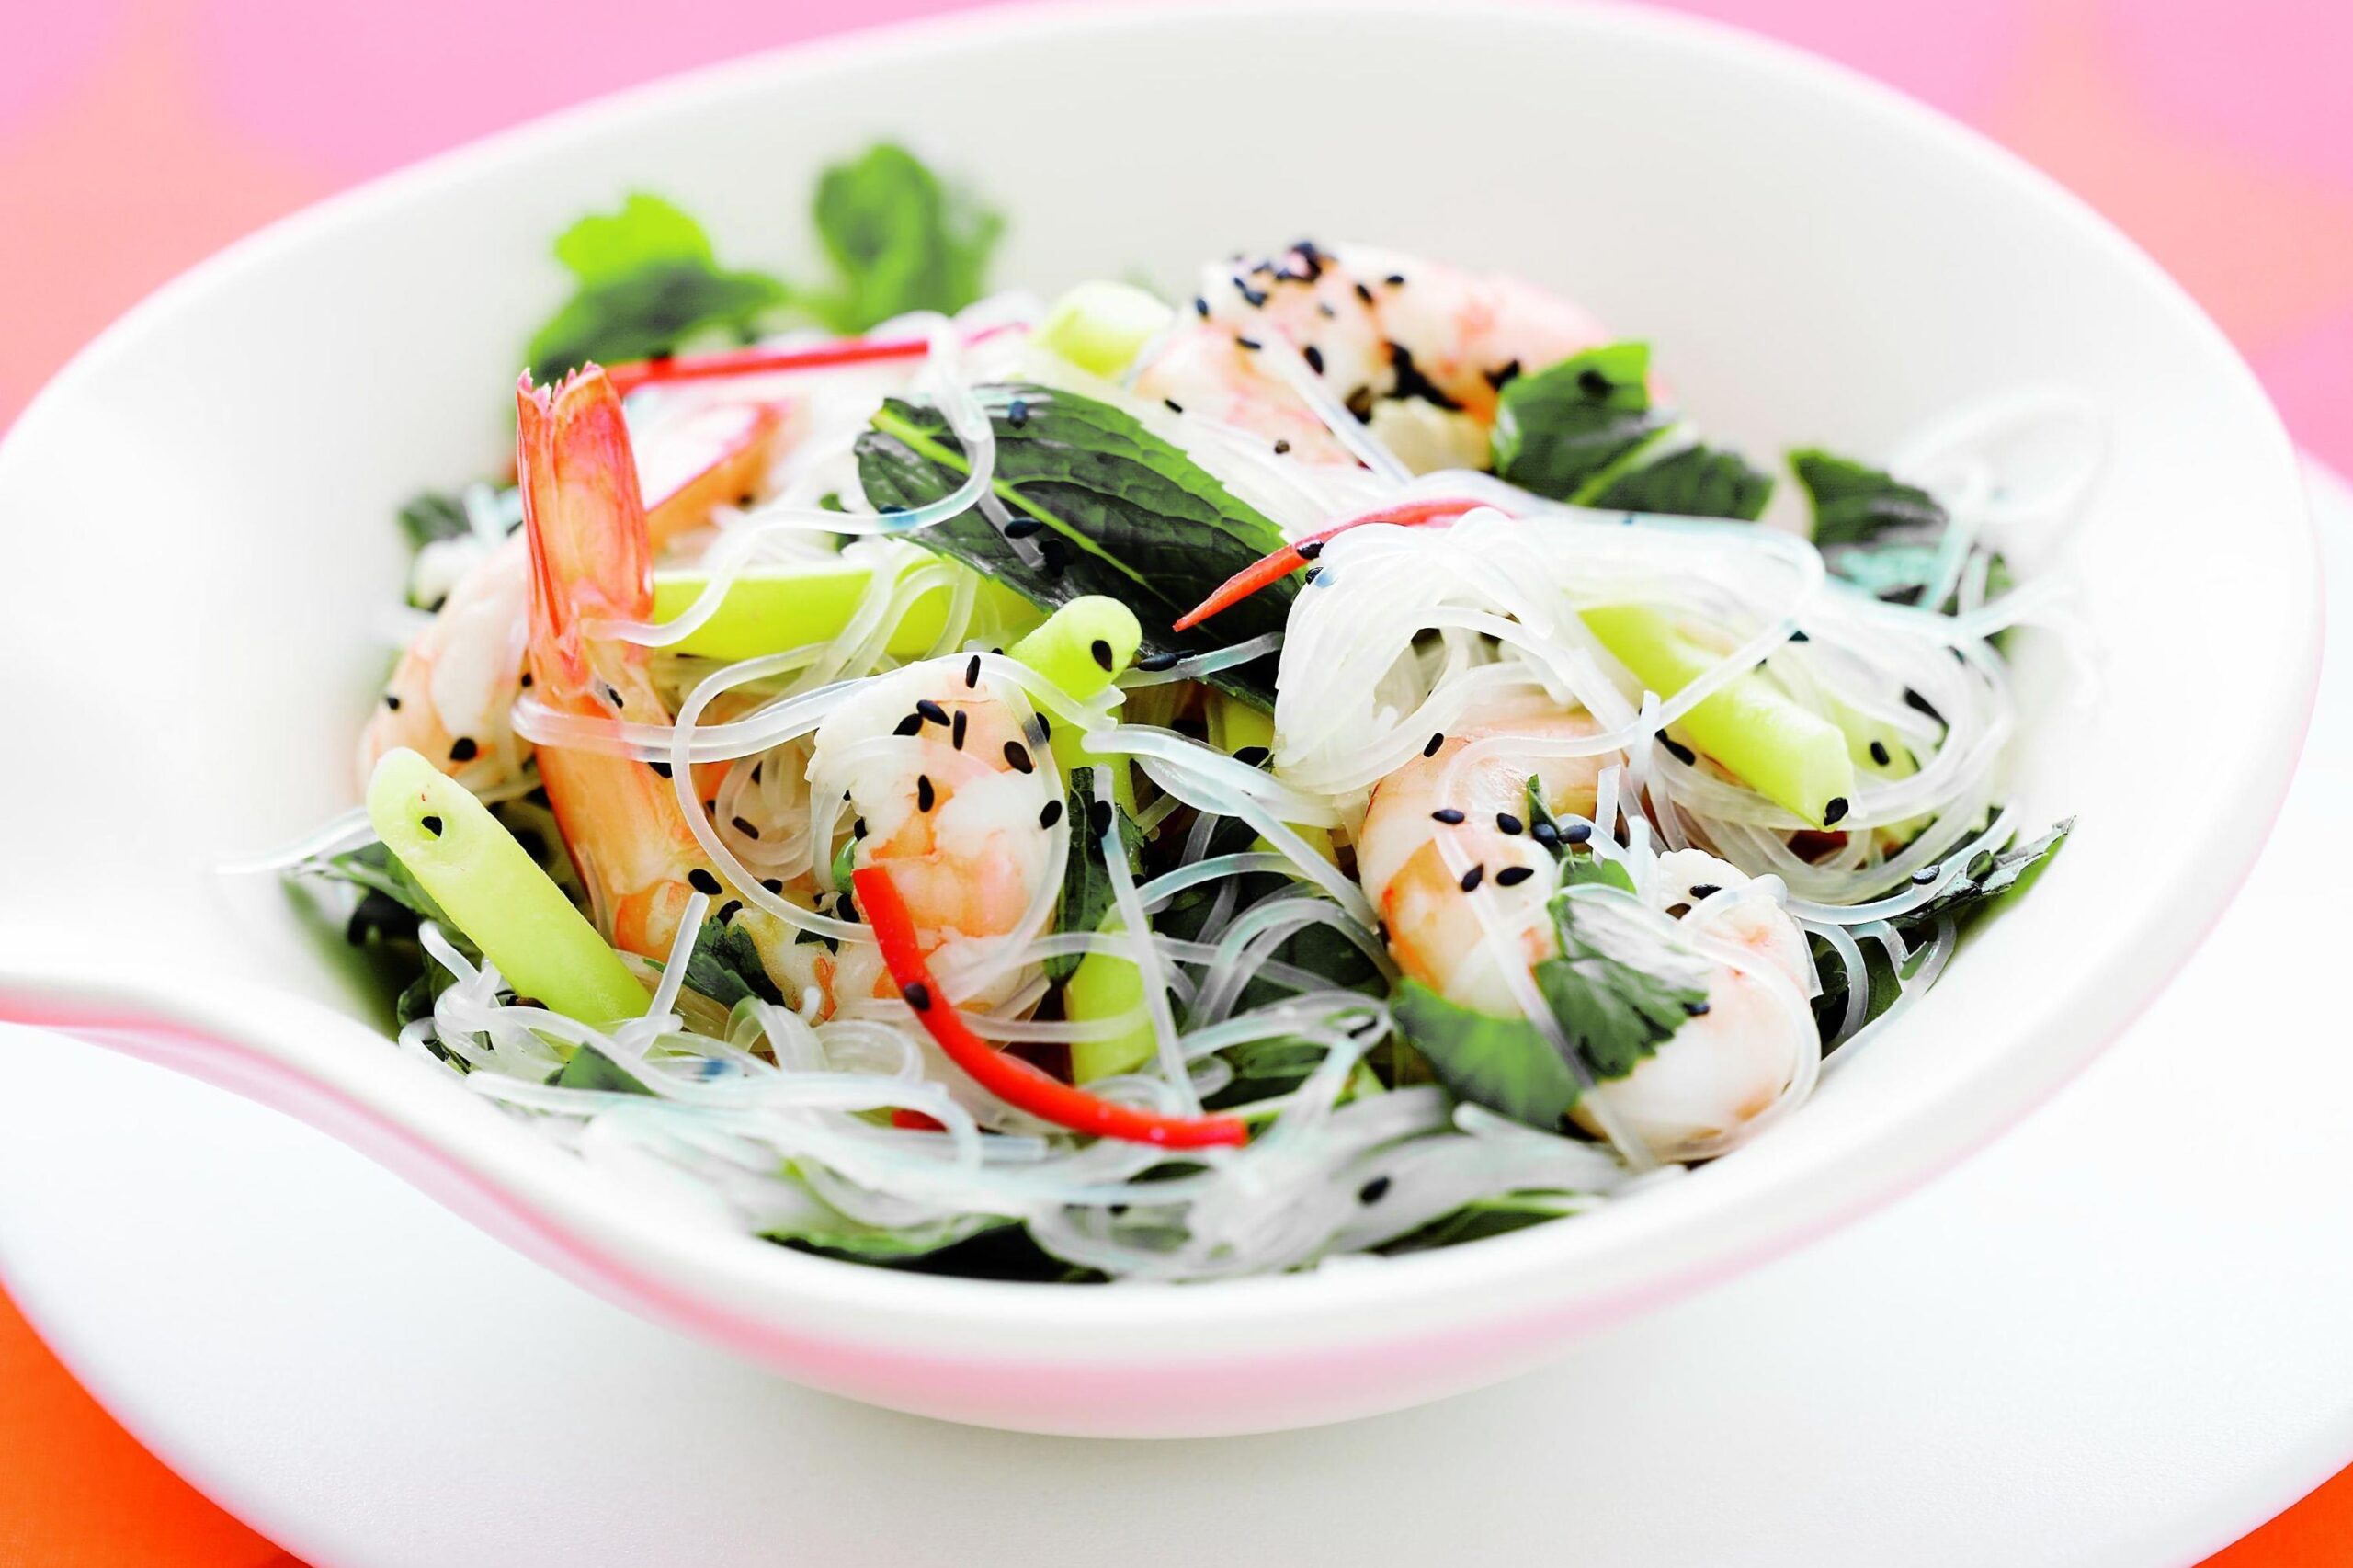 Sure, here are 10 unique photo captions for the Vietnamese Shrimp and Glass Noodle Salad recipe: